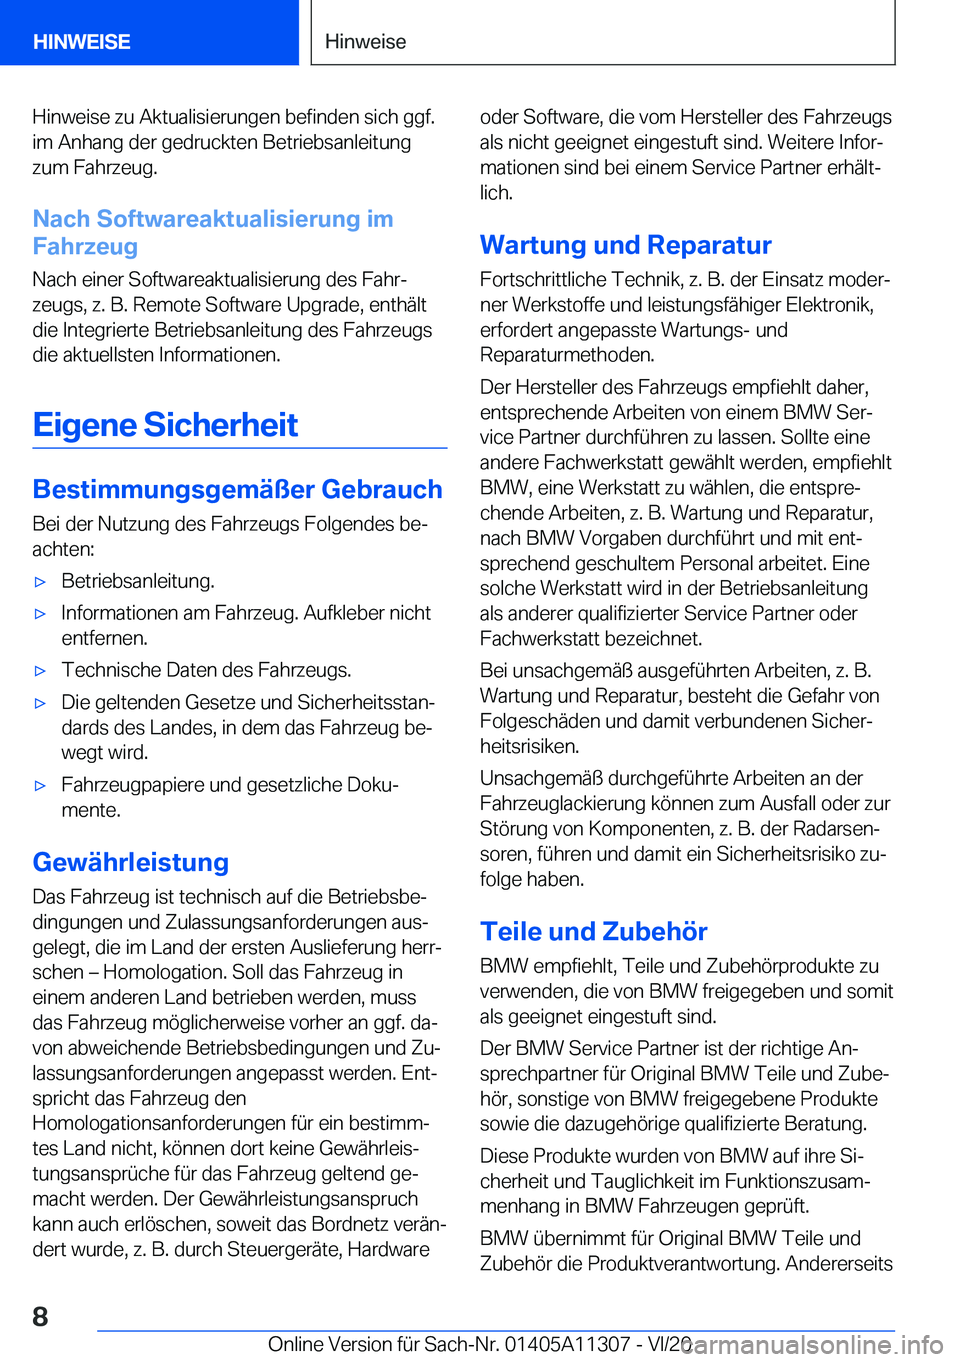 BMW 5 SERIES 2021  Betriebsanleitungen (in German) �H�i�n�w�e�i�s�e��z�u��A�k�t�u�a�l�i�s�i�e�r�u�n�g�e�n��b�e�f�i�n�d�e�n��s�i�c�h��g�g�f�.�i�m��A�n�h�a�n�g��d�e�r��g�e�d�r�u�c�k�t�e�n��B�e�t�r�i�e�b�s�a�n�l�e�i�t�u�n�g�z�u�m��F�a�h�r�z�e�u